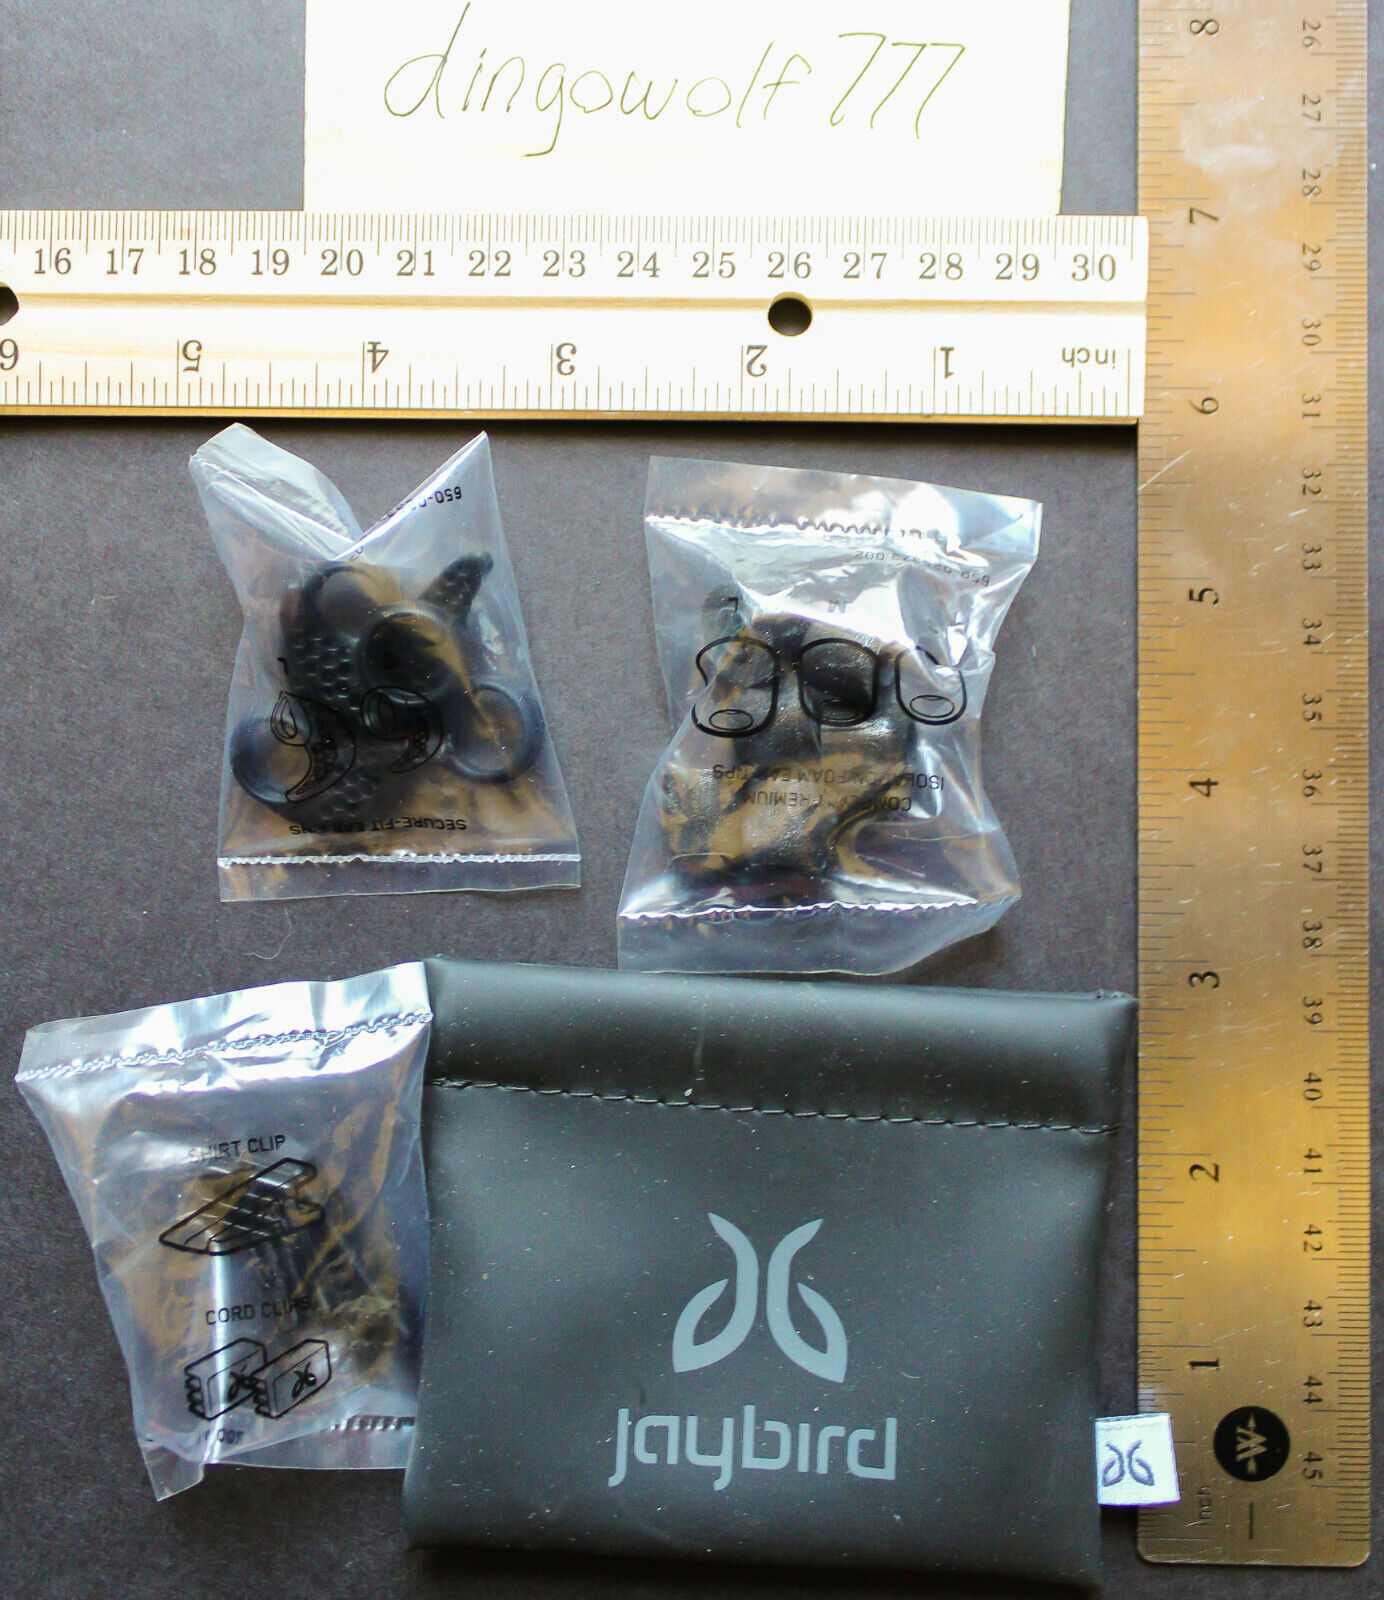 Jaybird Freedom F5 Case & Accessories - Good Condition